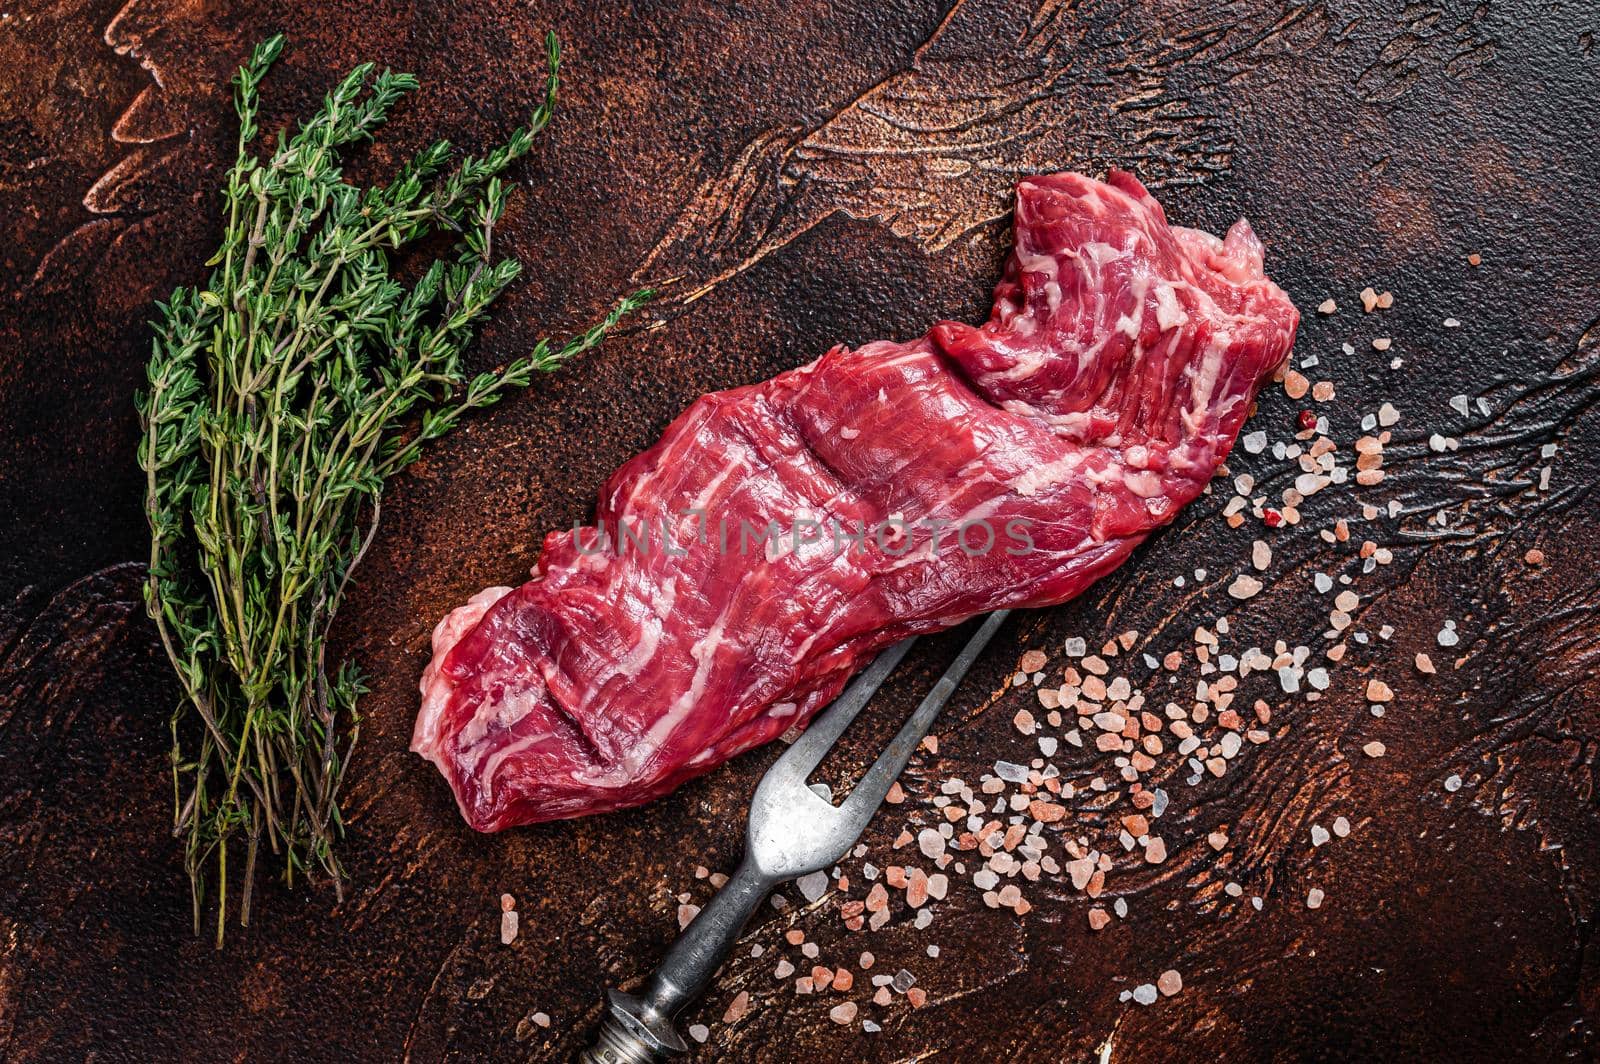 Raw machete skirt beef steak on meat fork. Dark background. Top view by Composter